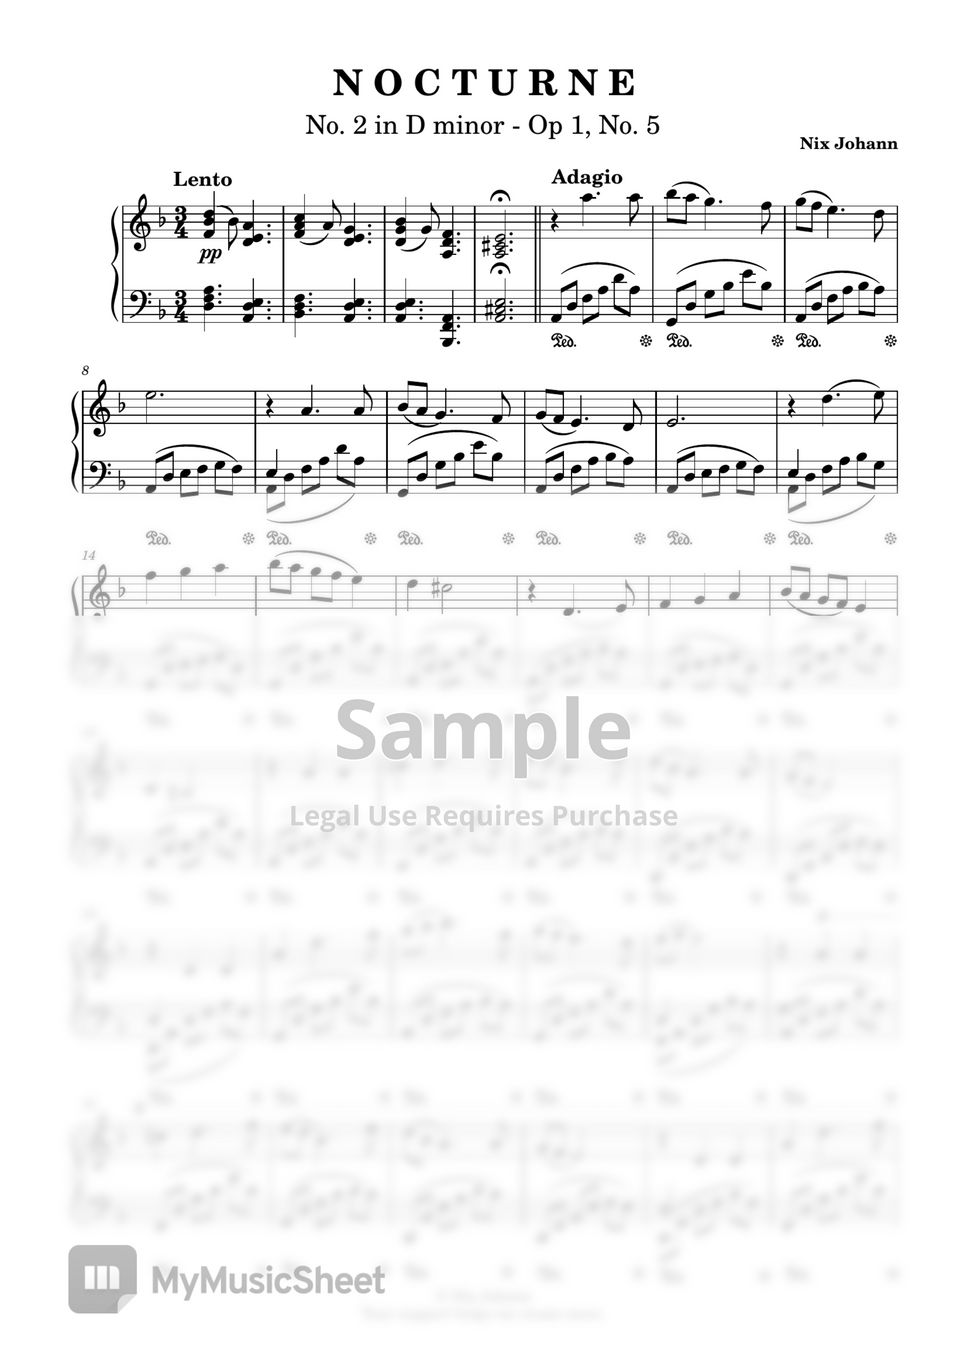 Nix Johann - Nocturne No. 2 in D minor (Op. 1, No. 5) Sheets